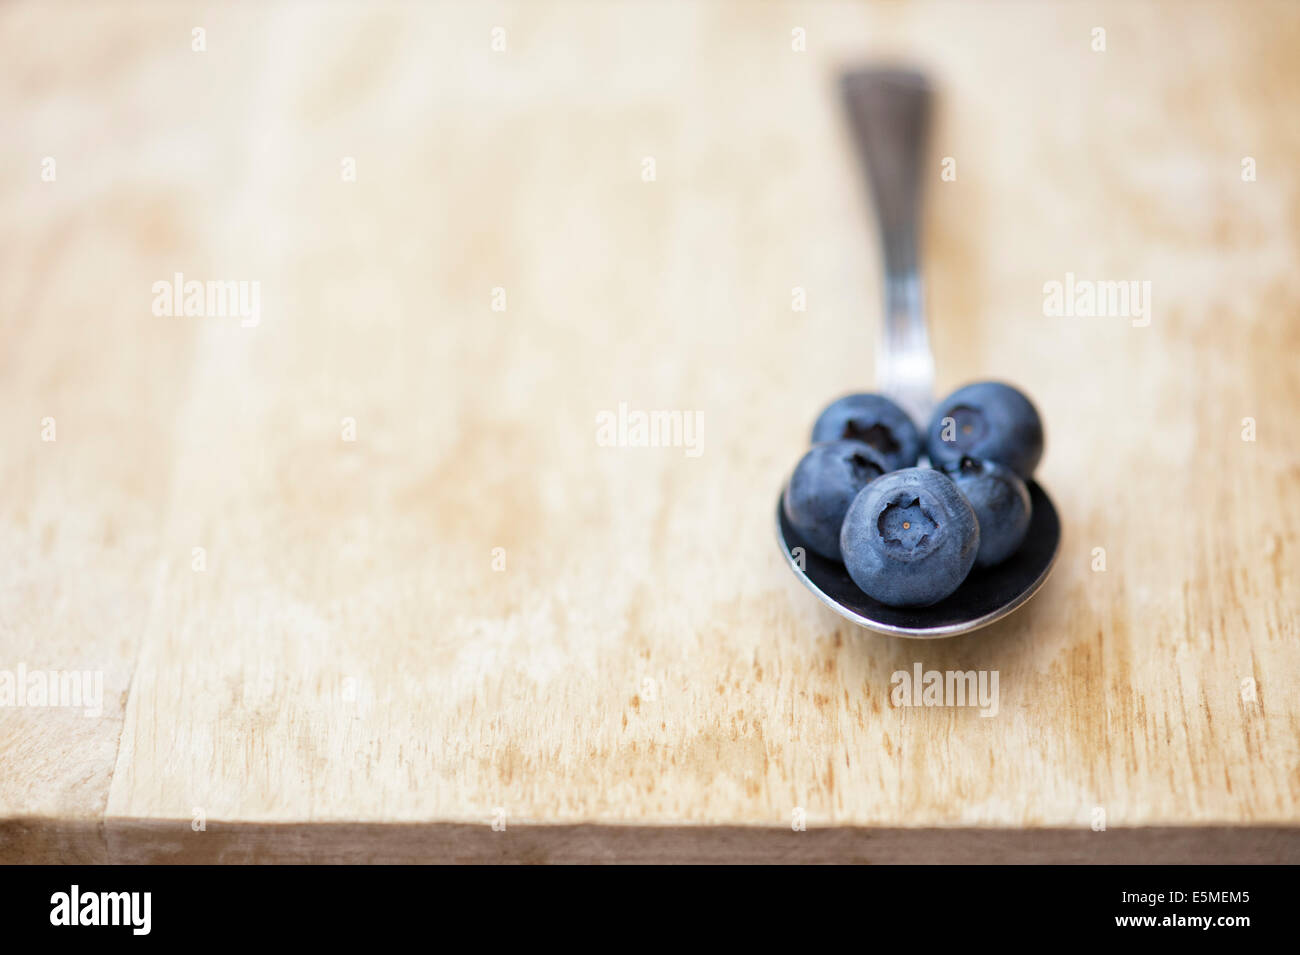 Vaccinium corymbosum. Picked Blueberry fruit on a spoon Stock Photo